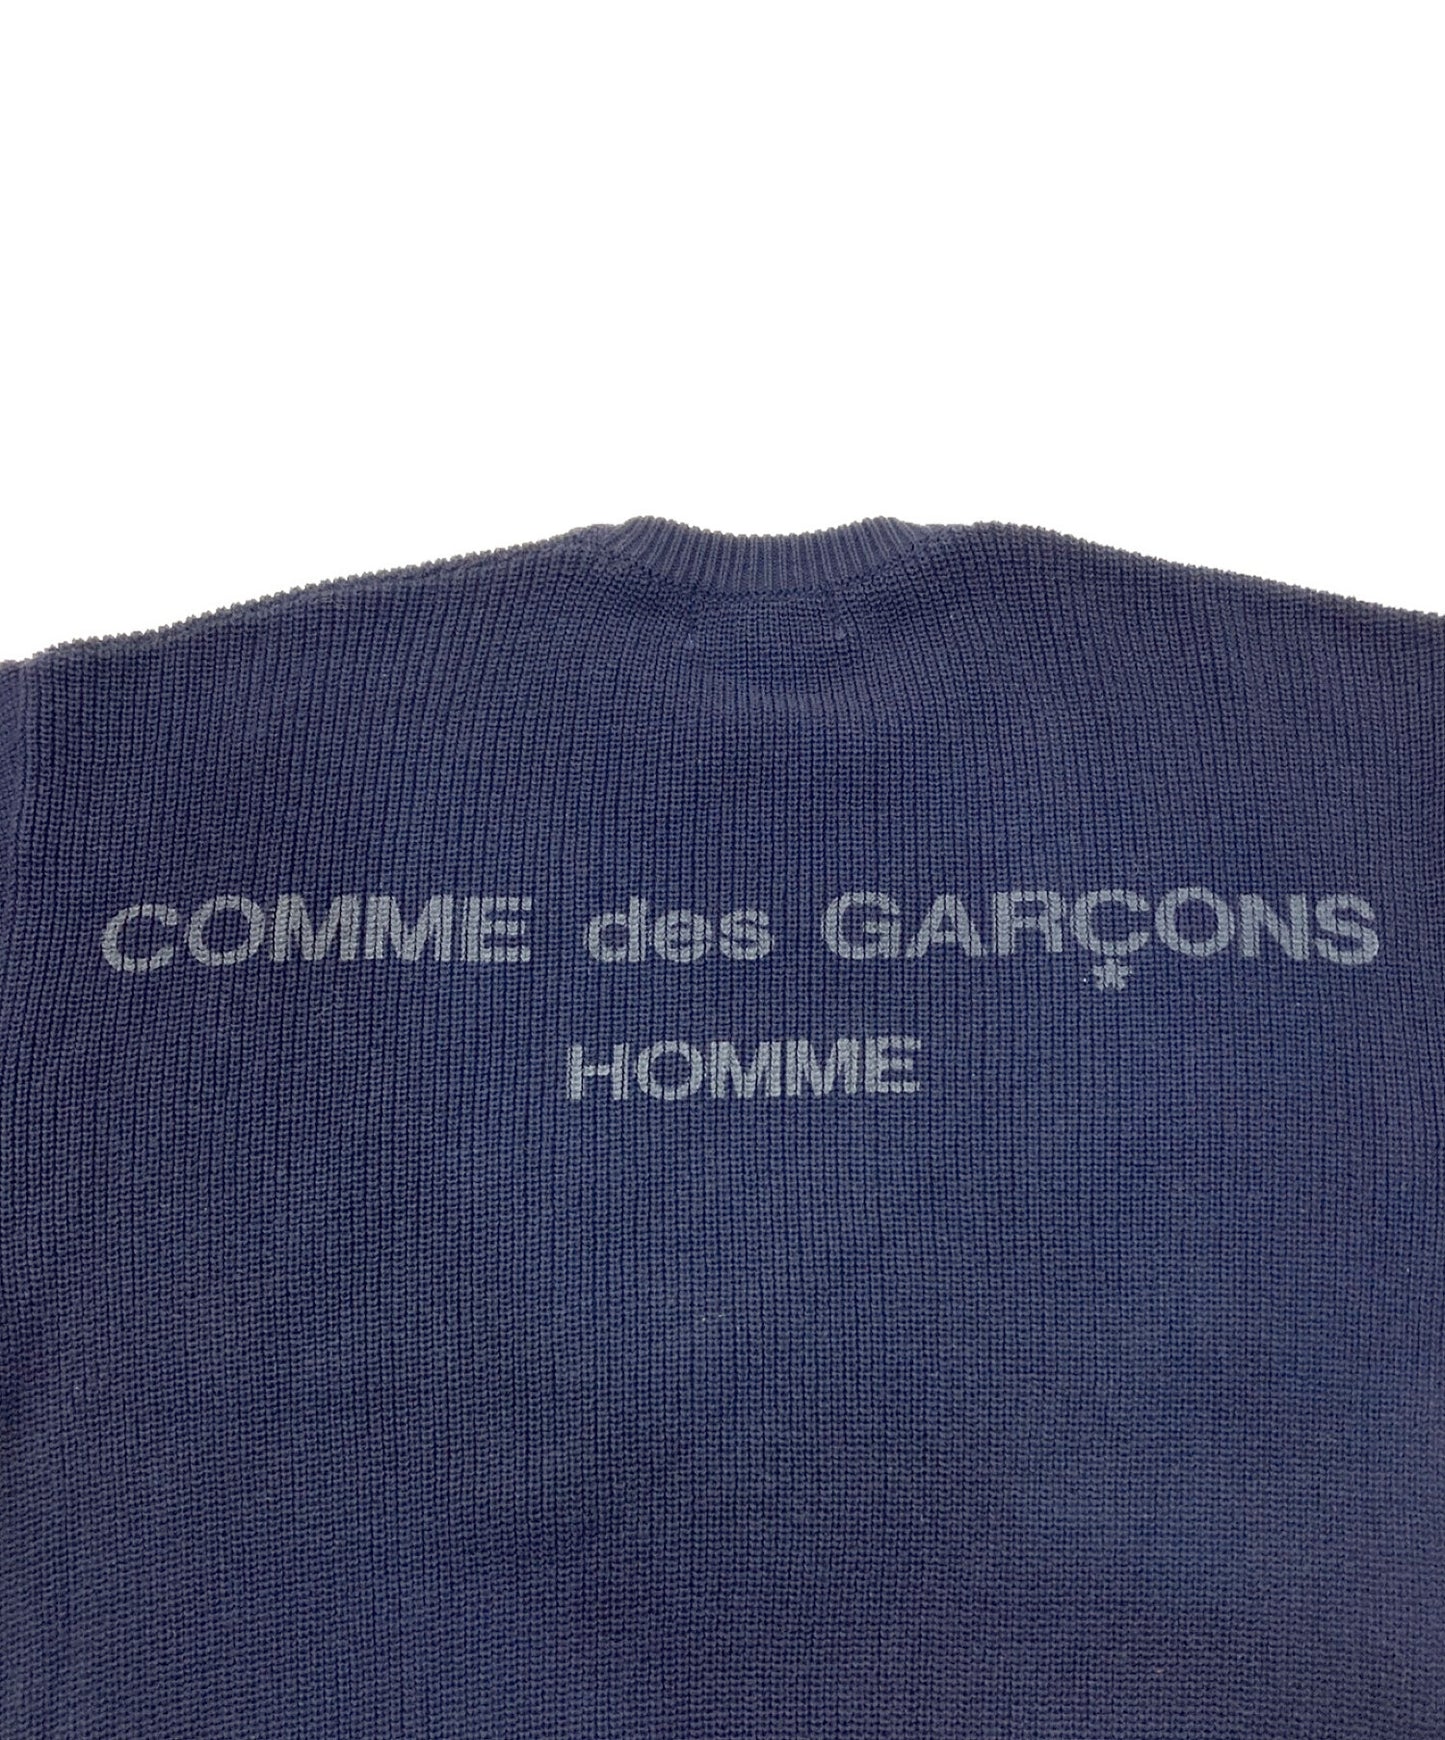 Comme des Garcons Homme [เก่า] โลโก้หลังถัก HN-110250